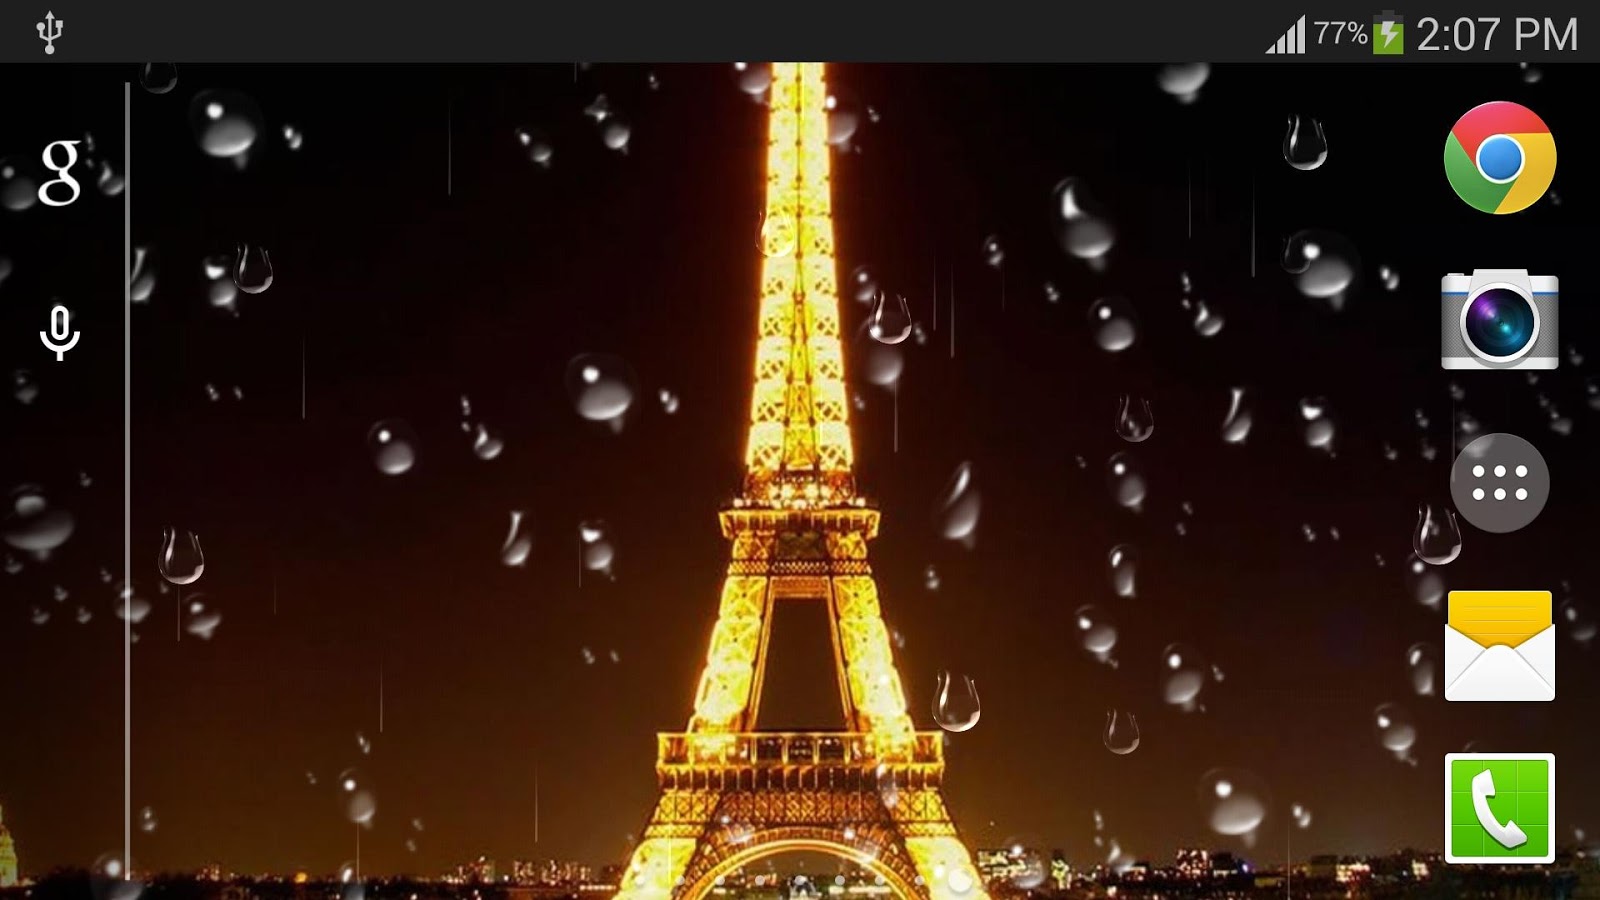 Rainy Wallpaper Paris Live PRO Apl Android Di Google Play